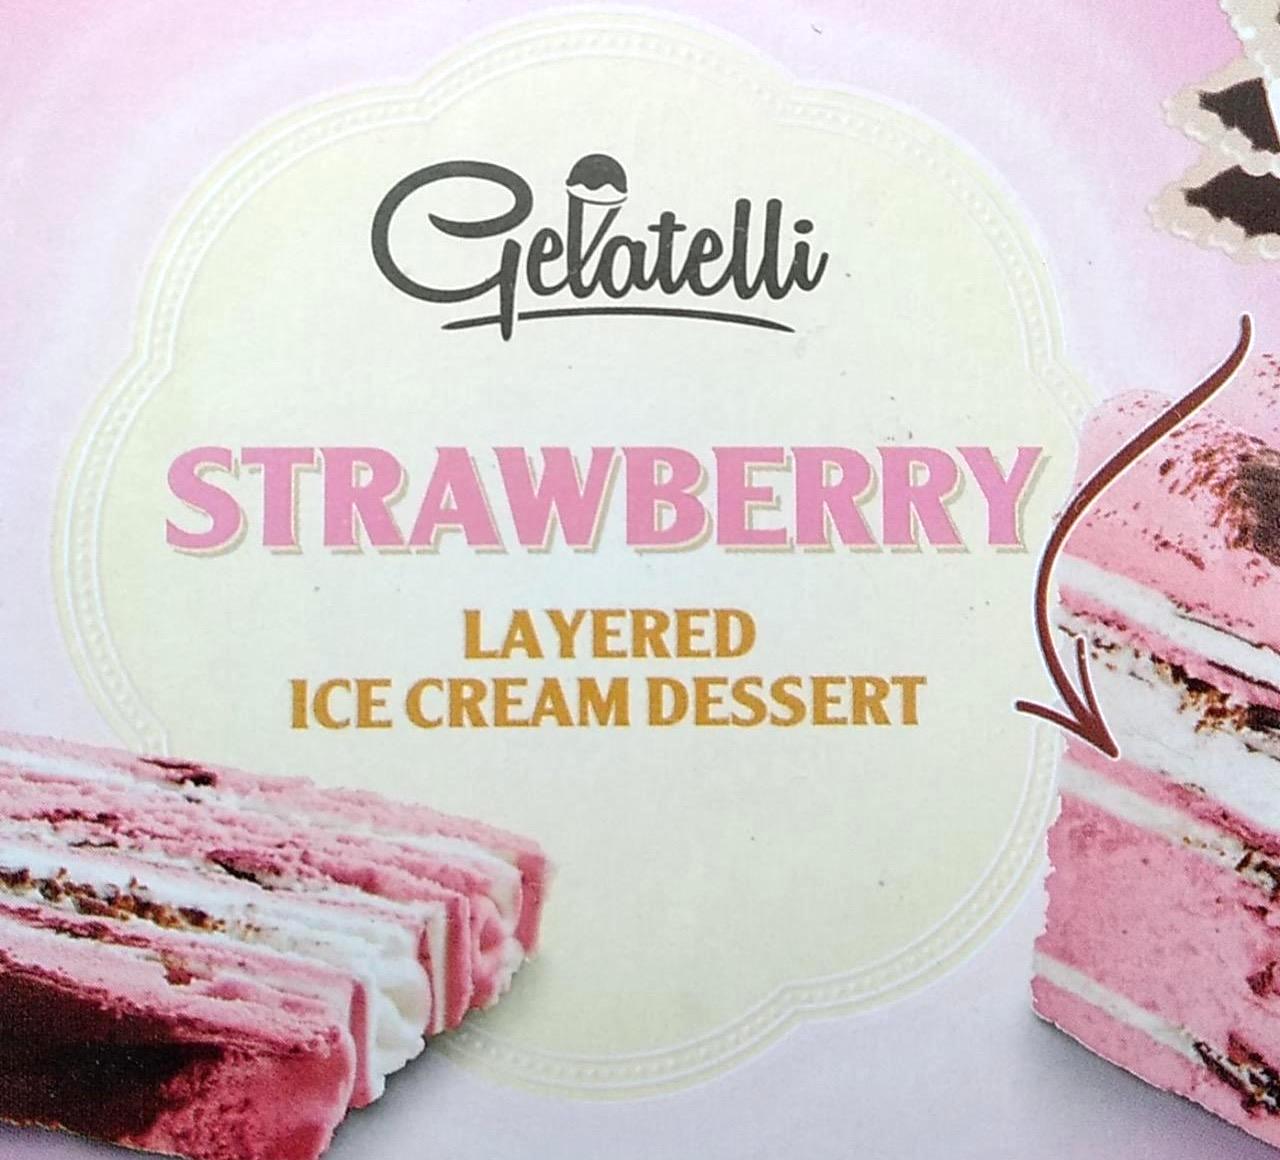 Fotografie - Strawberry layered ice cream dessert Gelatelli